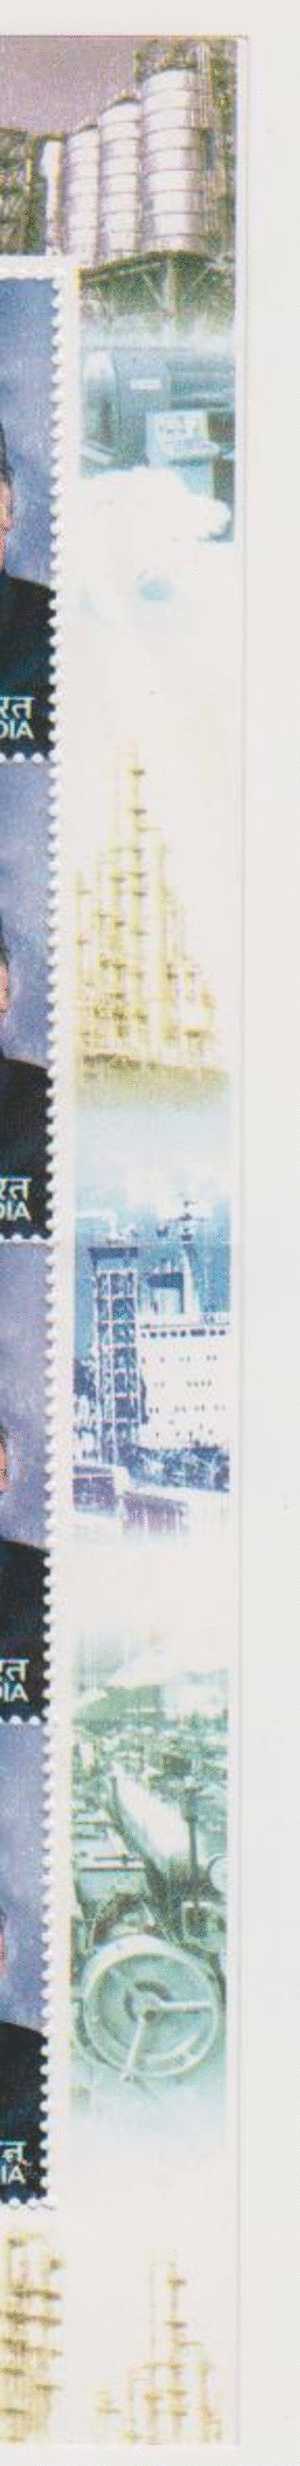 India 2002 MNH, Ambani, MS, Sheetlet, Industrialist, Famous People, Ship, Textiles, Oil Refinery, - Blocks & Sheetlets